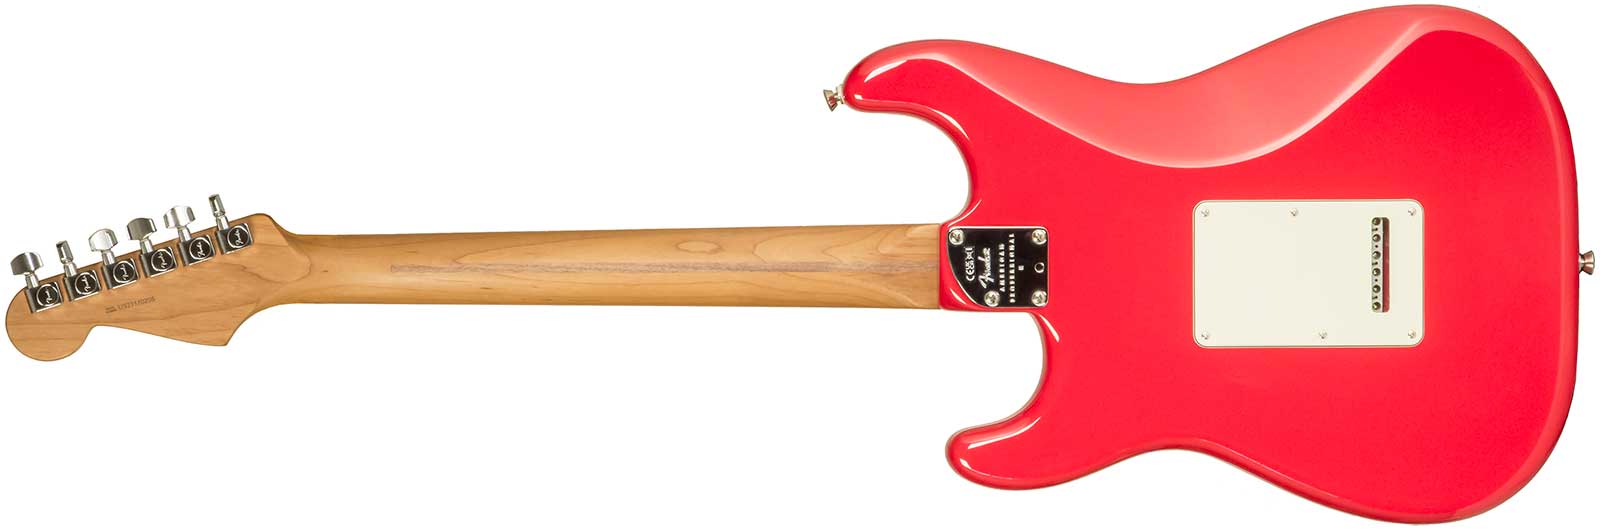 Fender Strat American Professional Ii Ltd Usa 3s Trem Rw - Fiesta Red - Str shape electric guitar - Variation 4